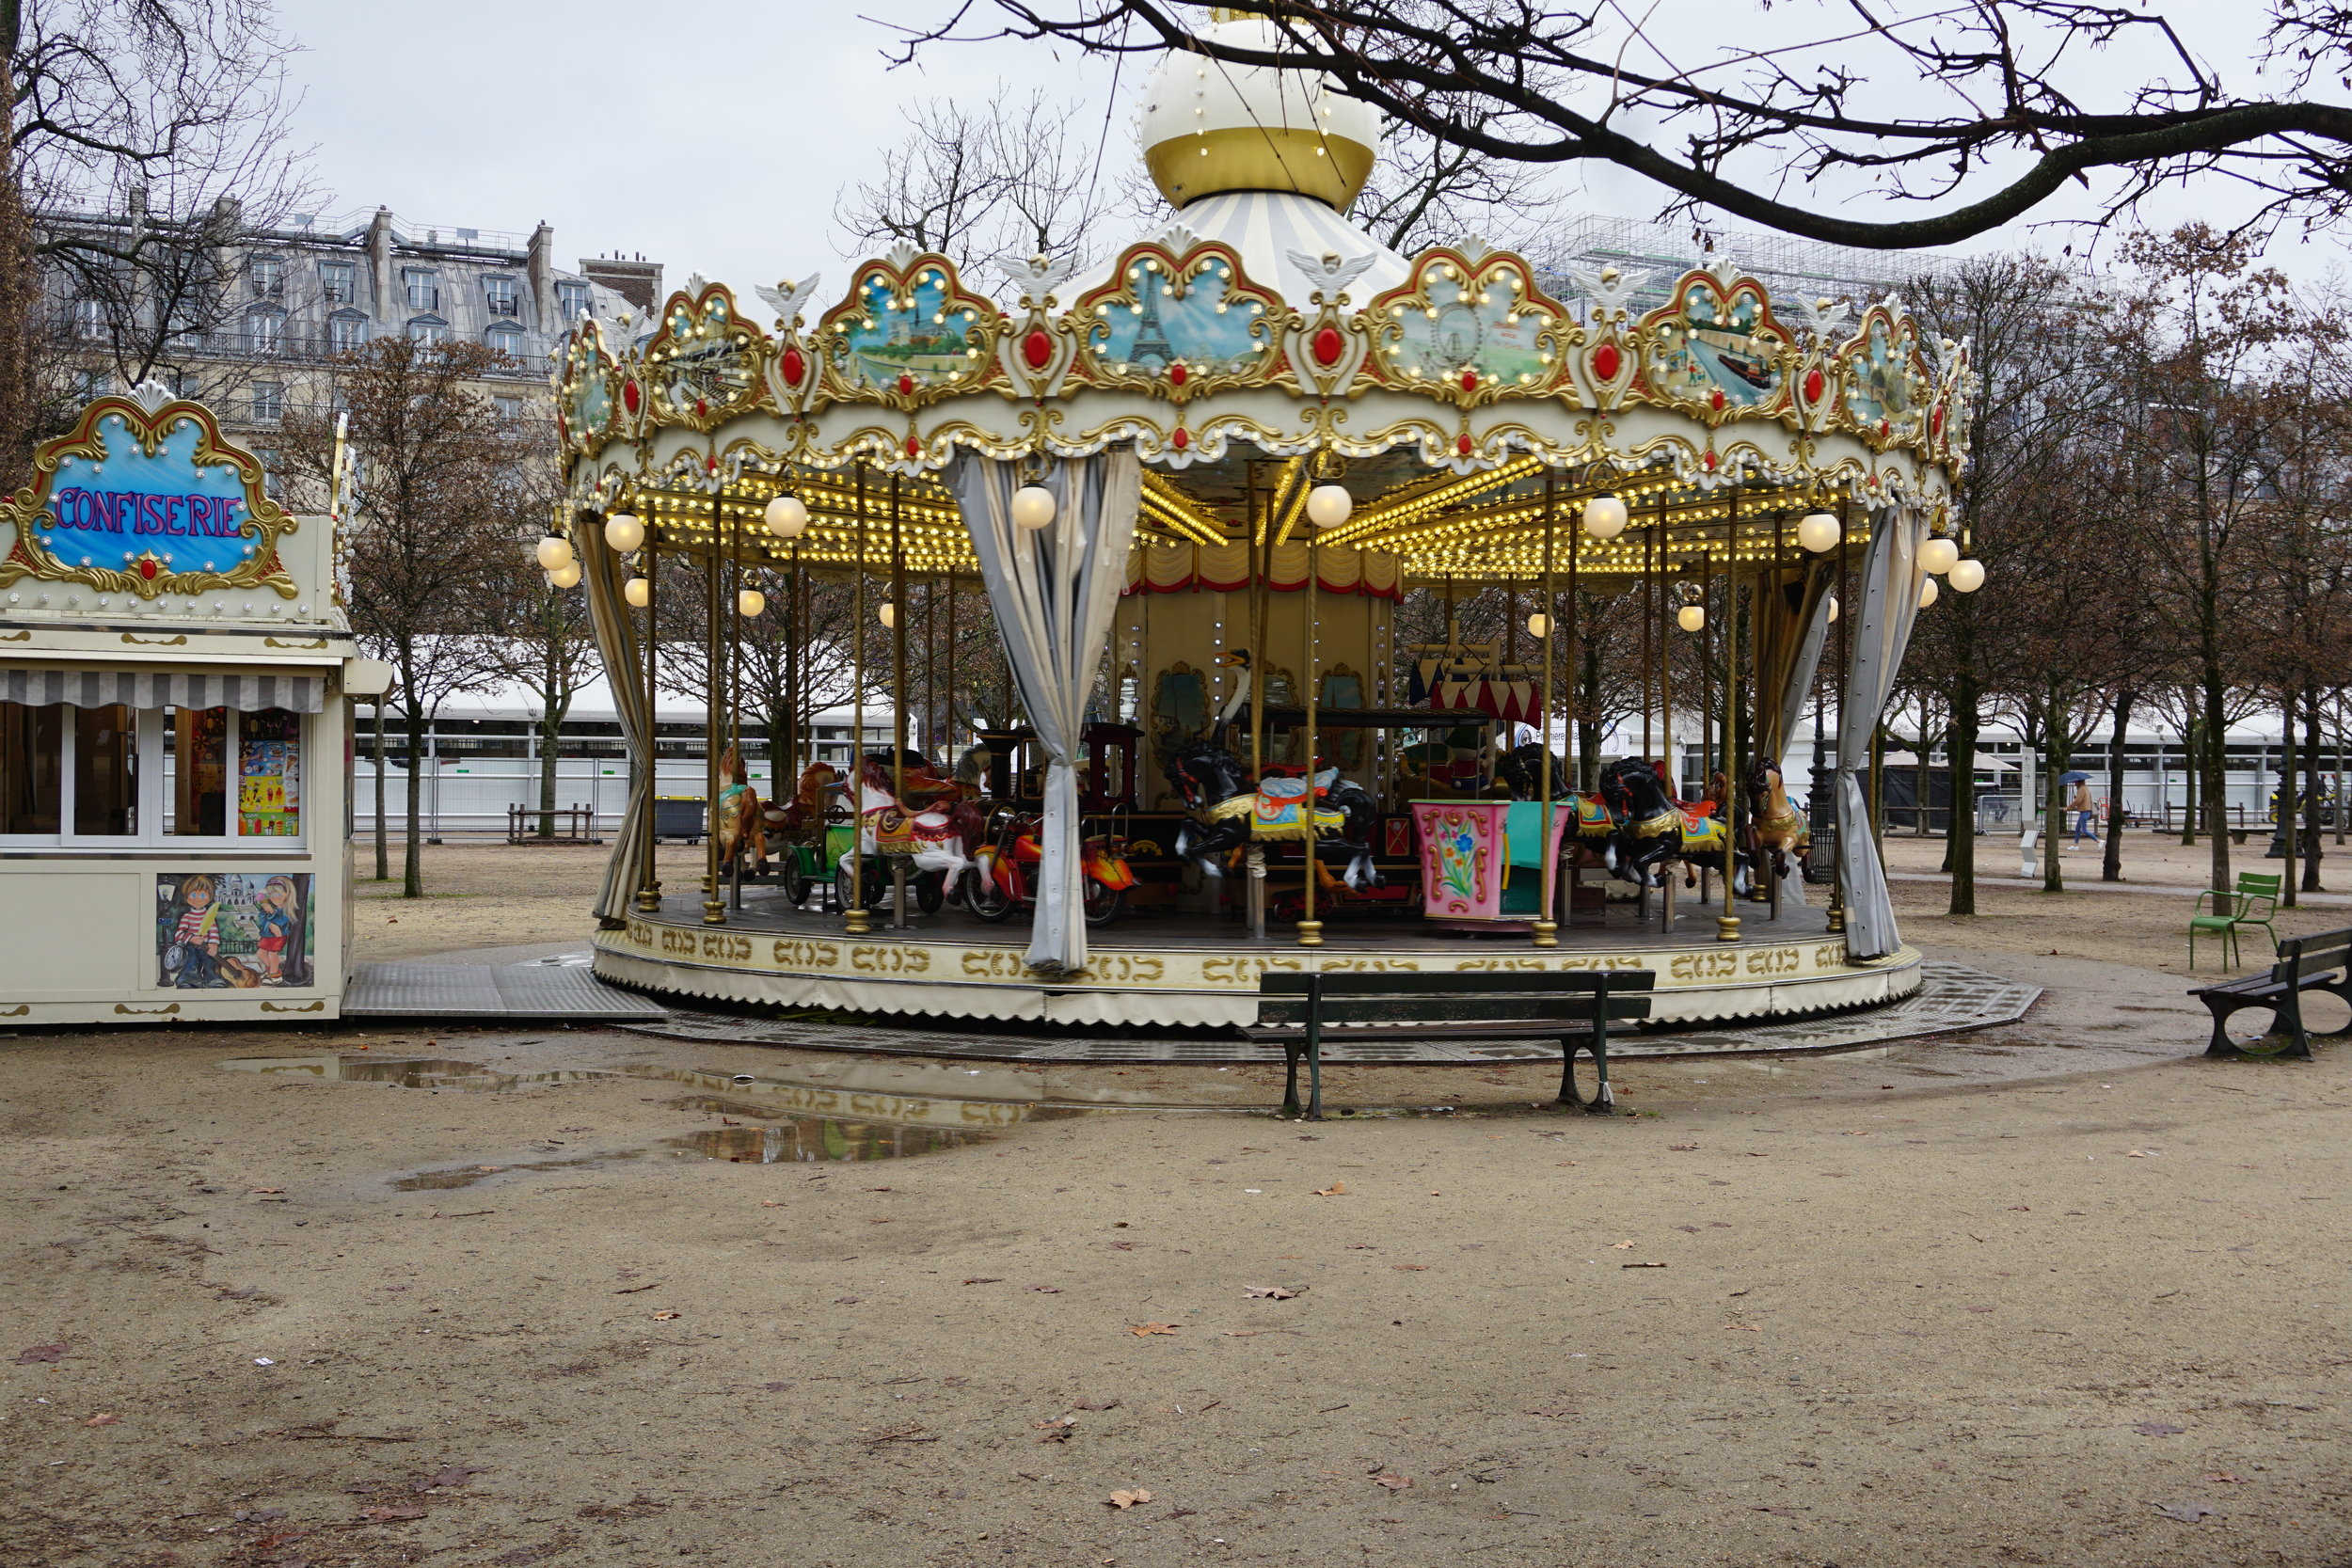  Carousel in Jardin des Tuileries 